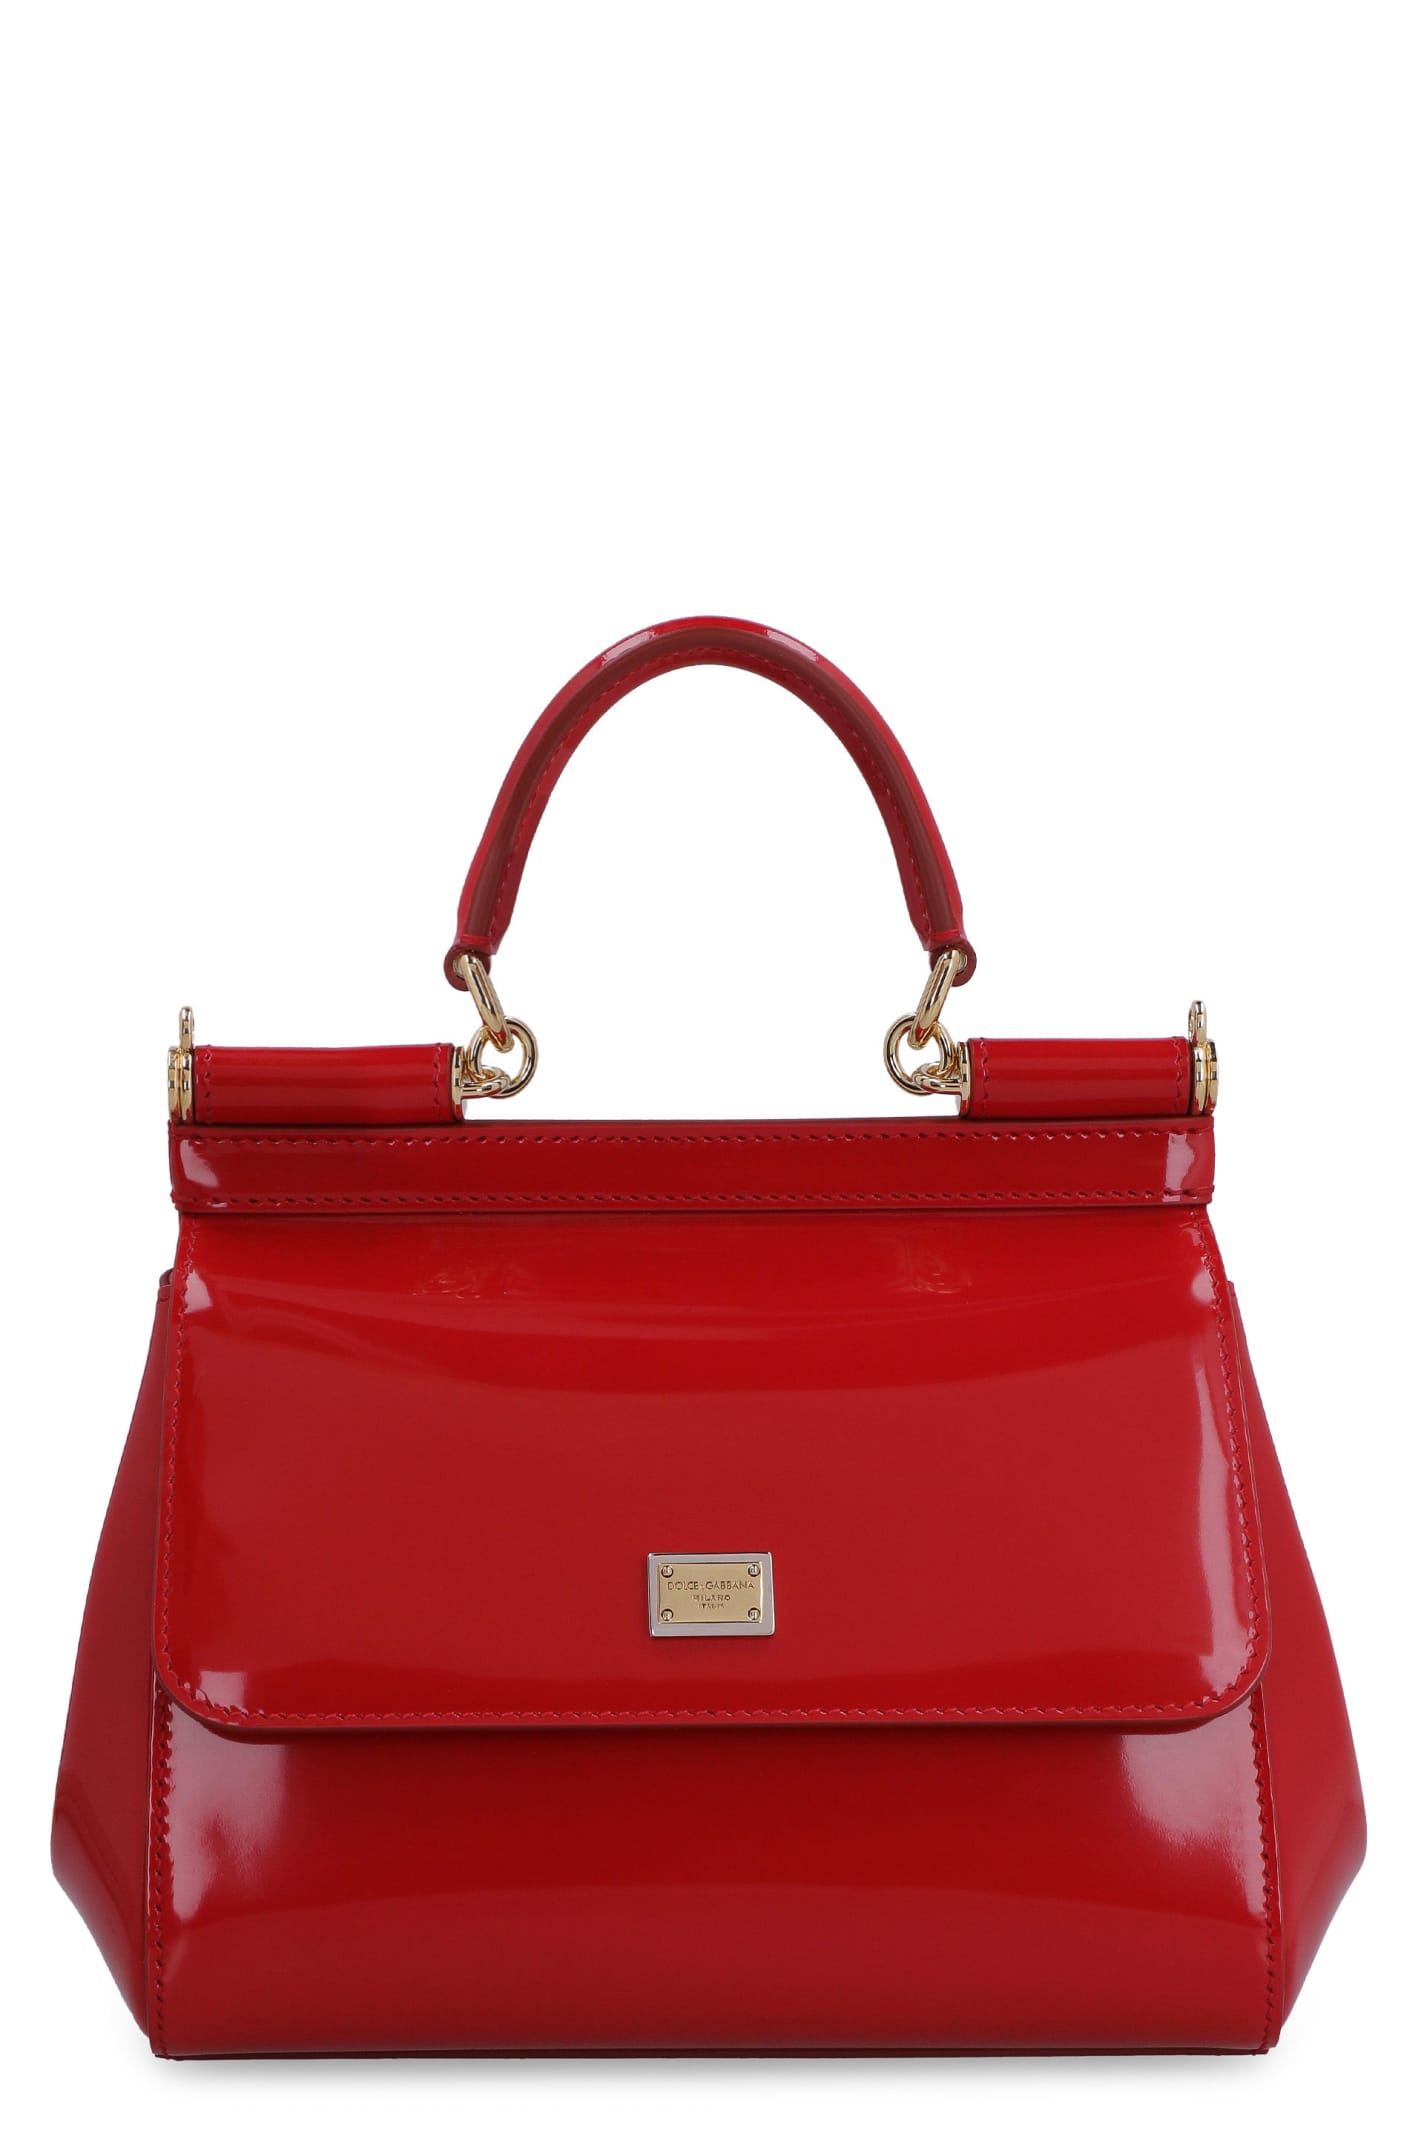 Dolce & Gabbana Sicily Leather Mini Handbag